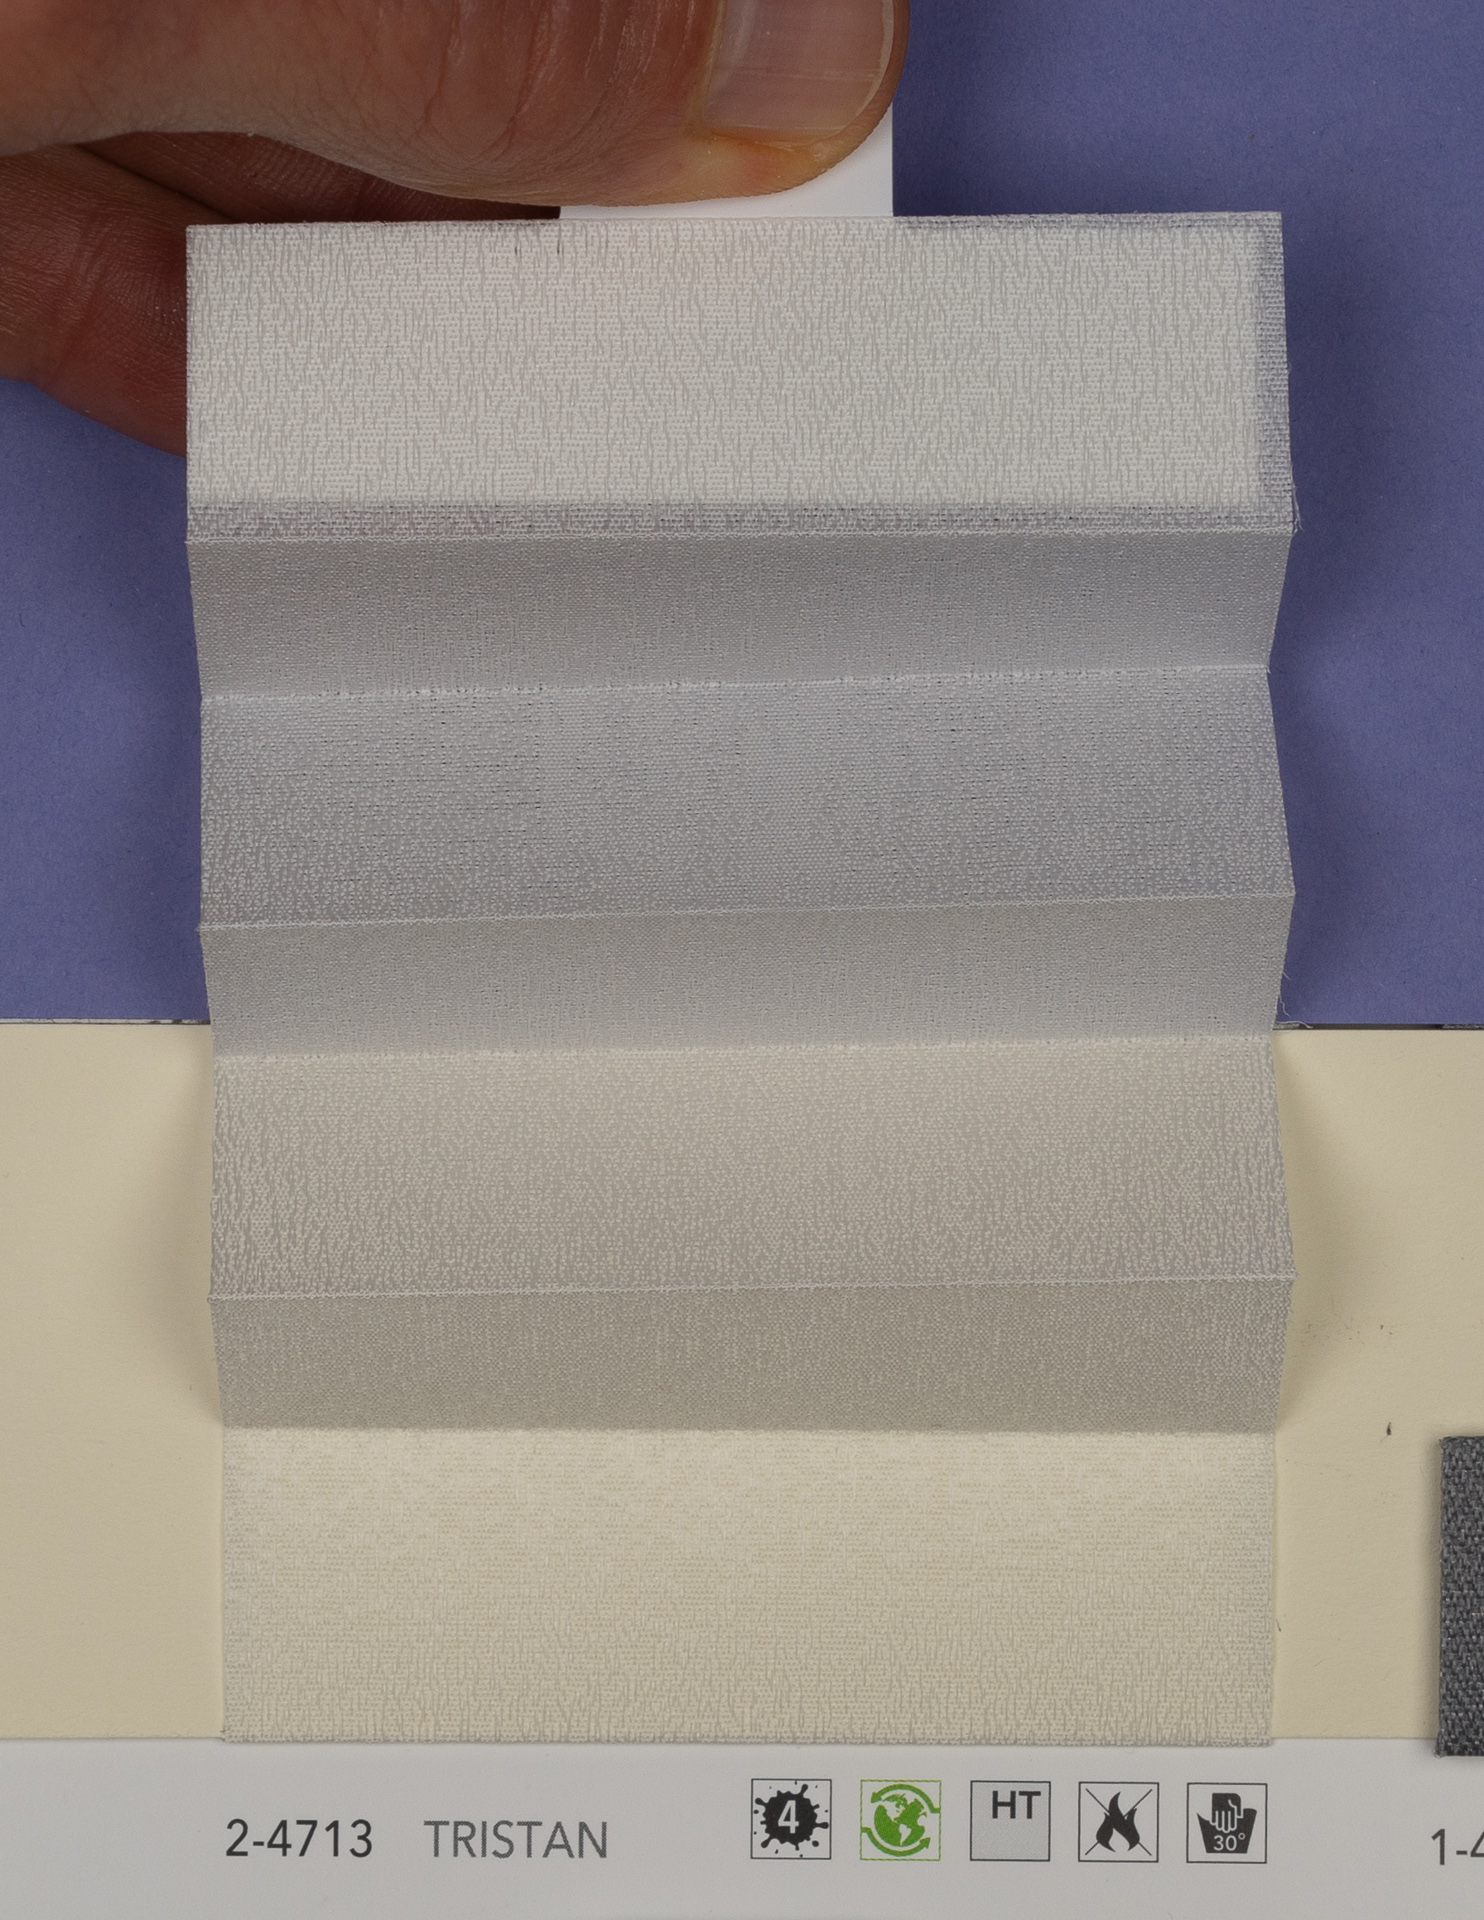 MHZ Plissee Stoff Muster aus der Farbkarte "19 Flame Retardant" | Material: 100 % RPES